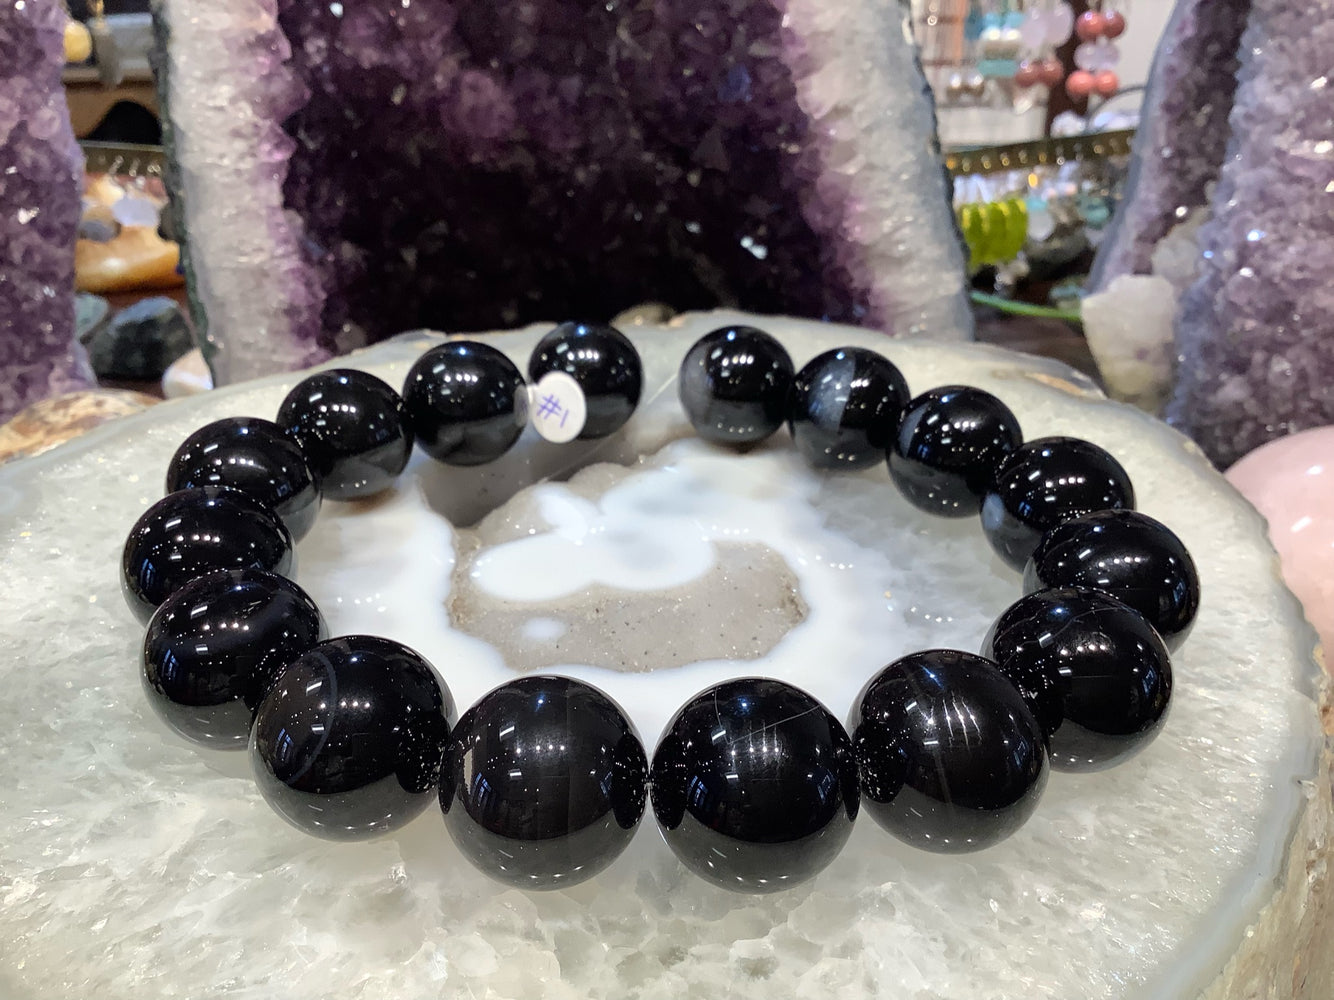 25mm Natural Black Agate Round Gemstone Beads